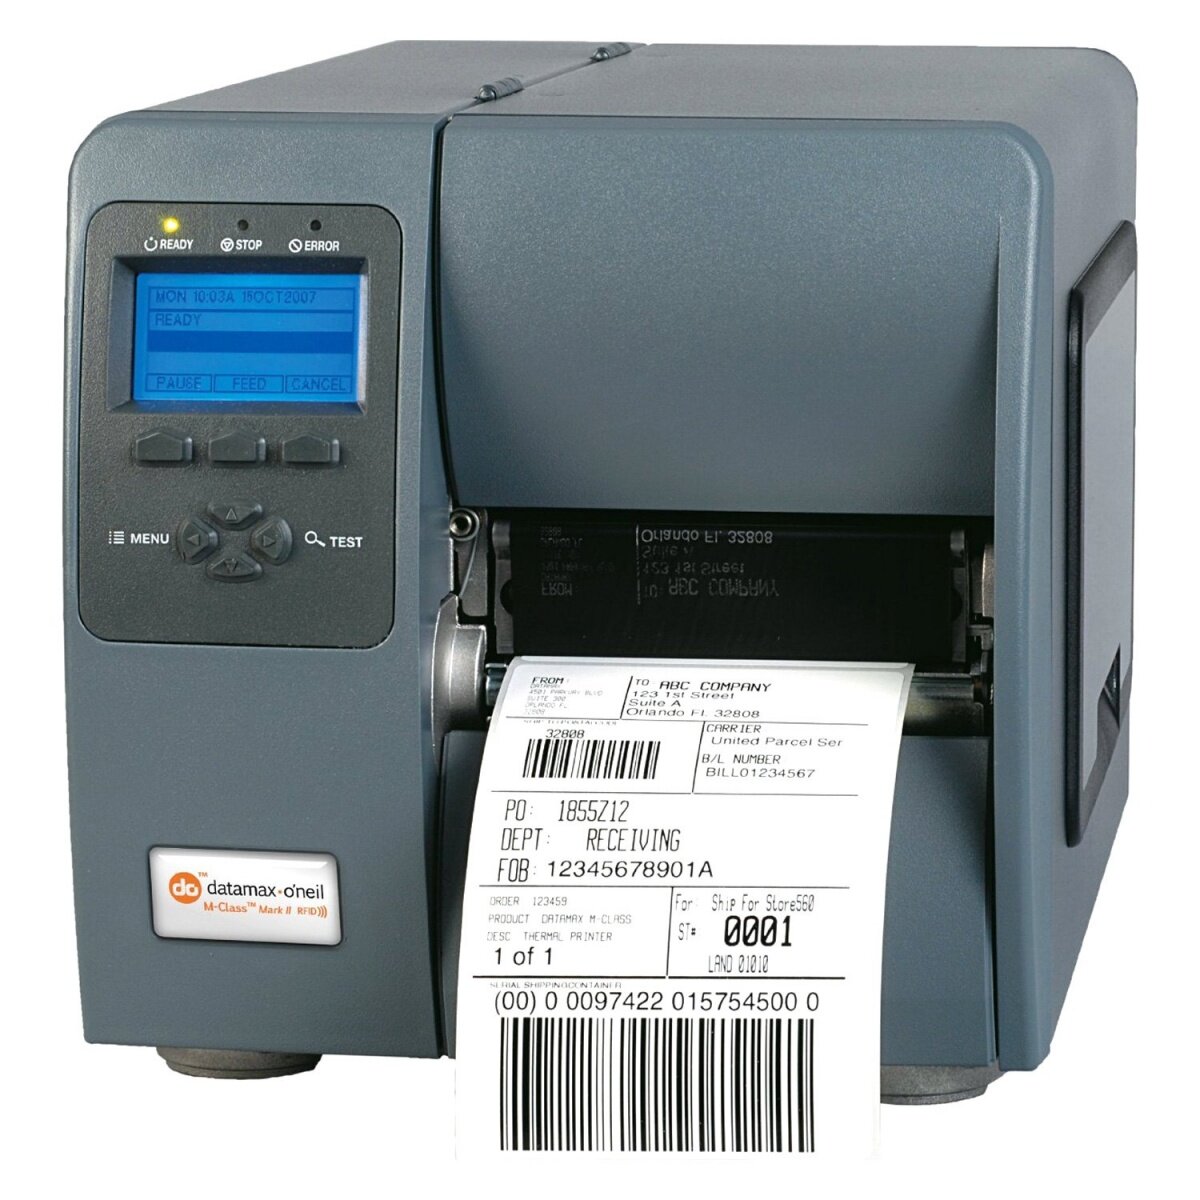 Принтер печати этикеток DATAMAX-O’NEIL M-4206 MARKII, 203dpi USB, RS232, LPT (М4206Е КD-00-4600007)